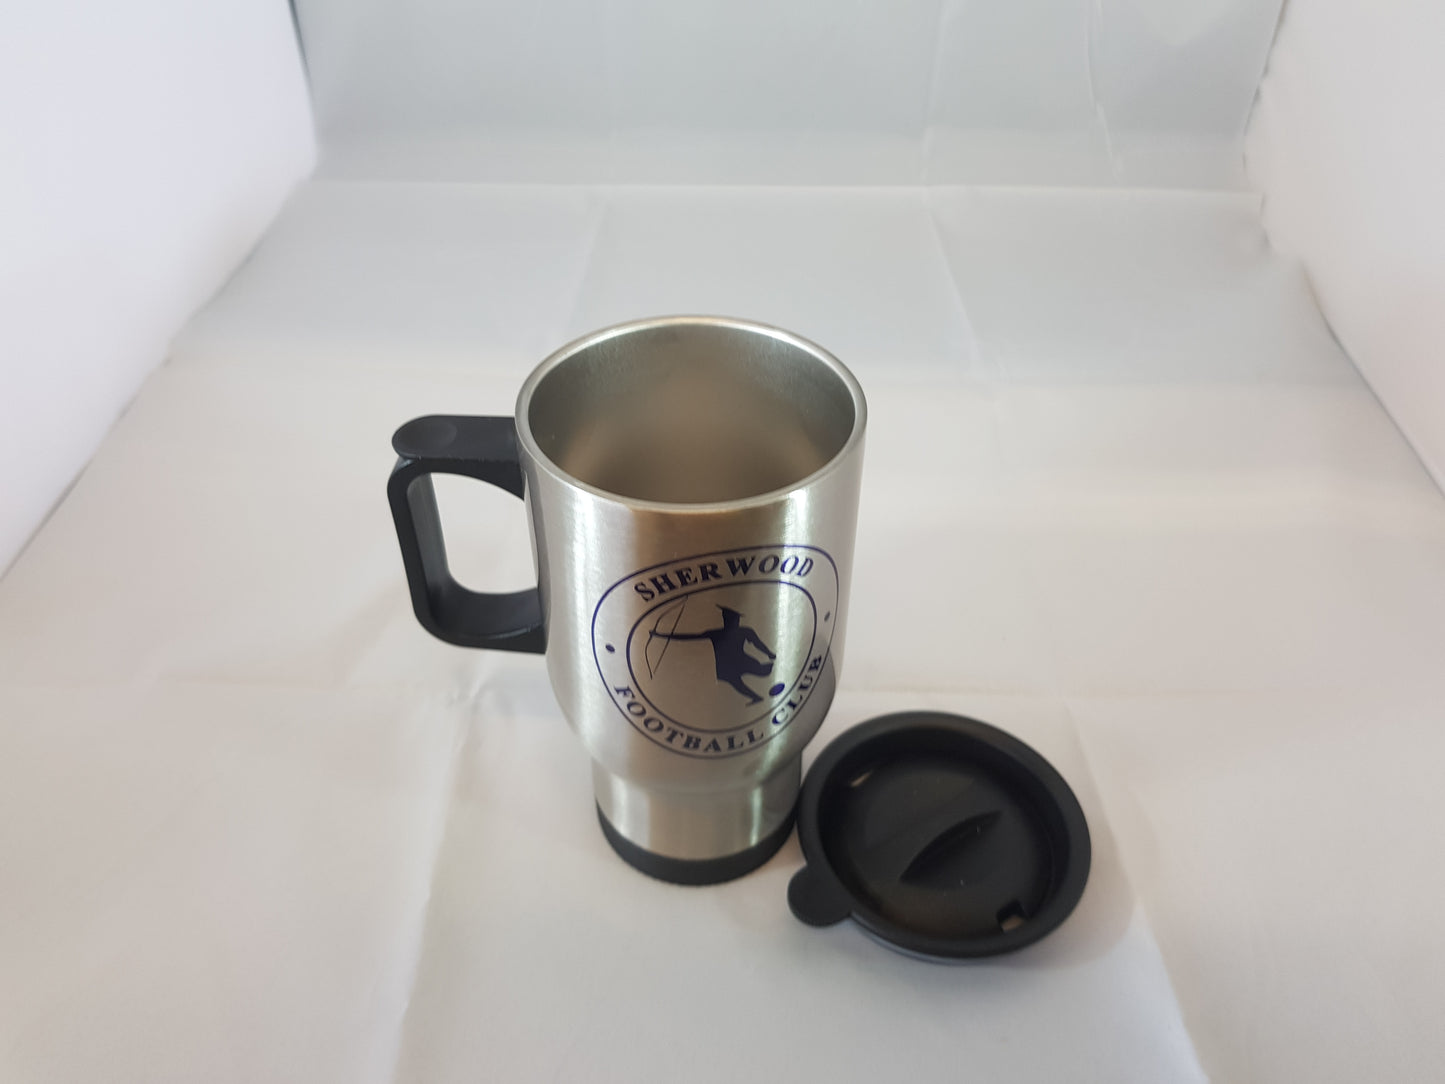 Sherwood FC - Personalised No.1 Fan Travel Mug